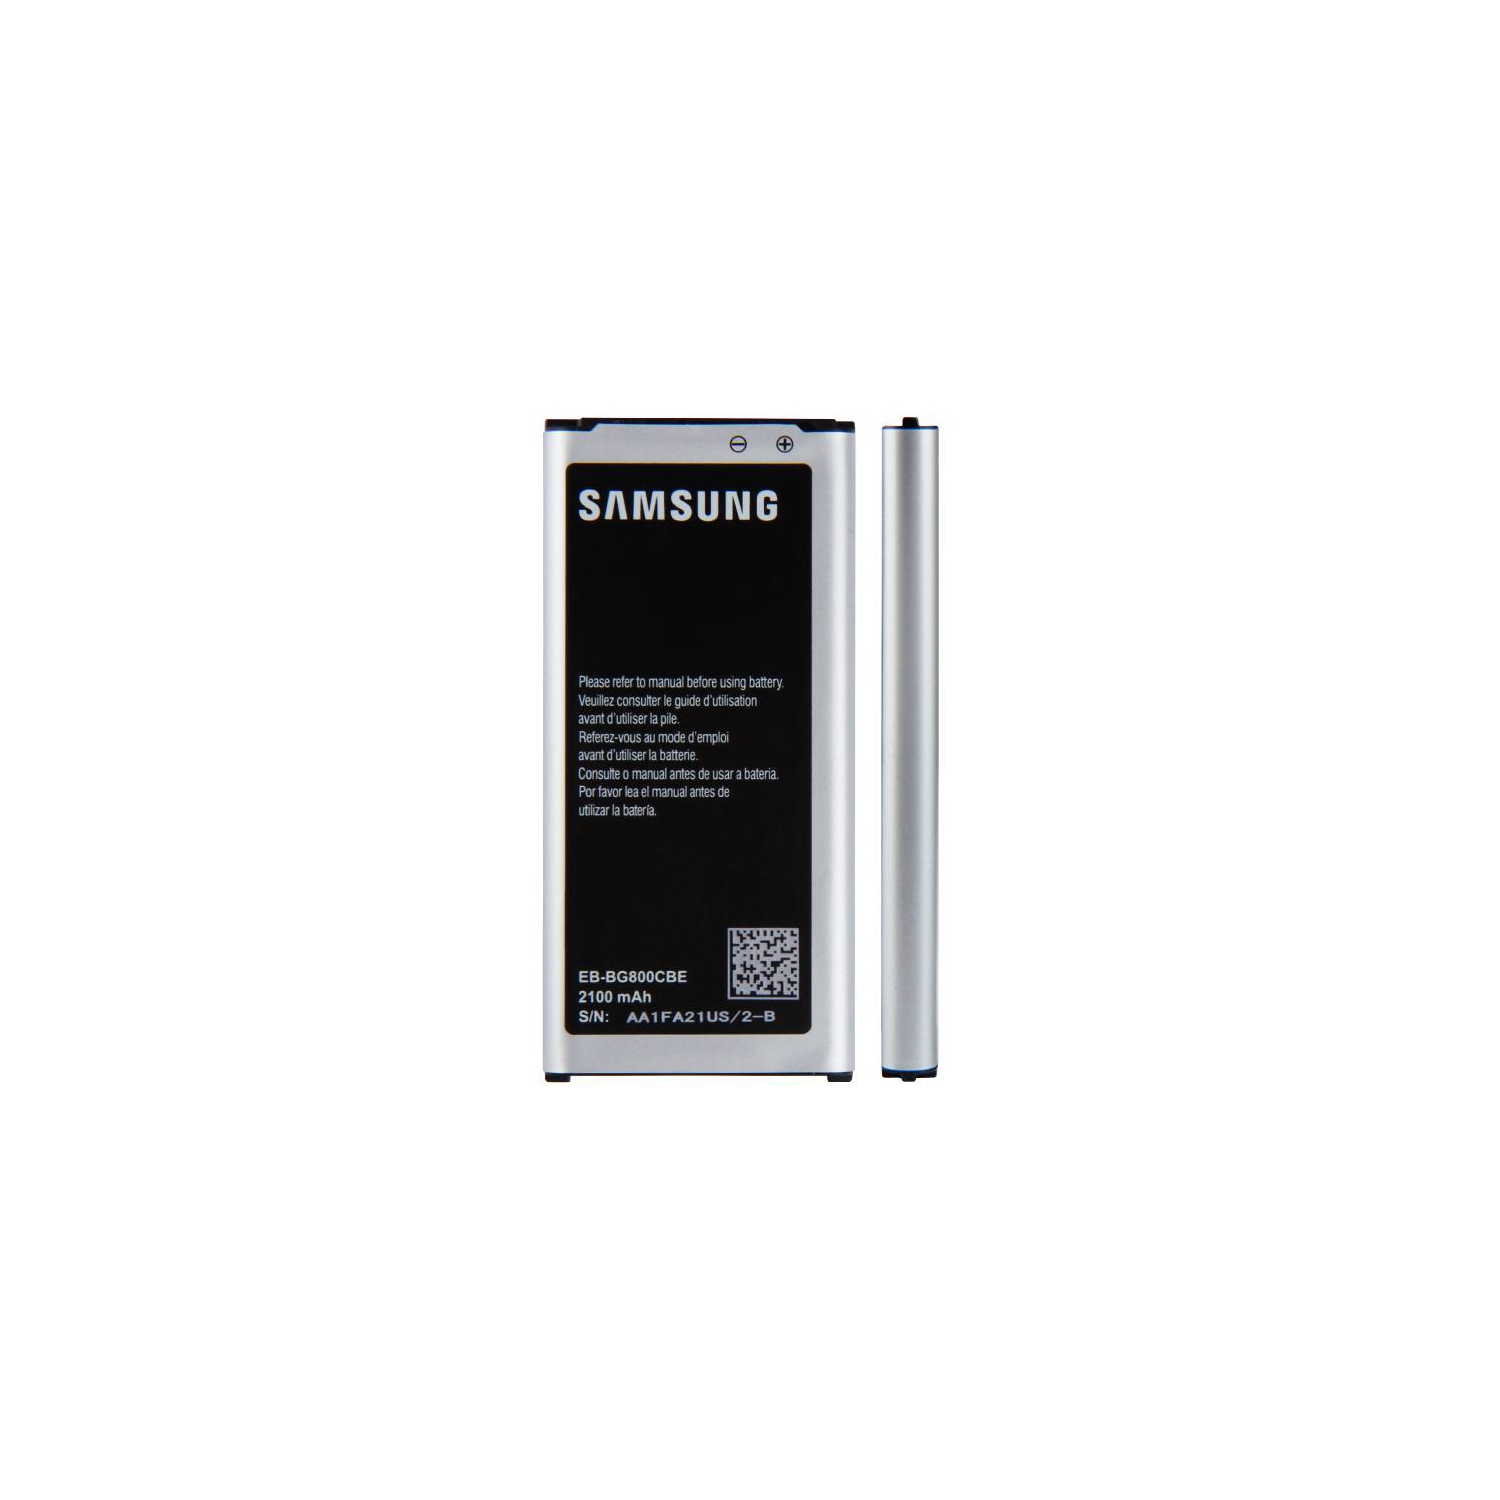 Original Samsung Galaxy S5 Mini Battery EB-BG800CBE 2100 mAh SM-G800W8 SM-G800A